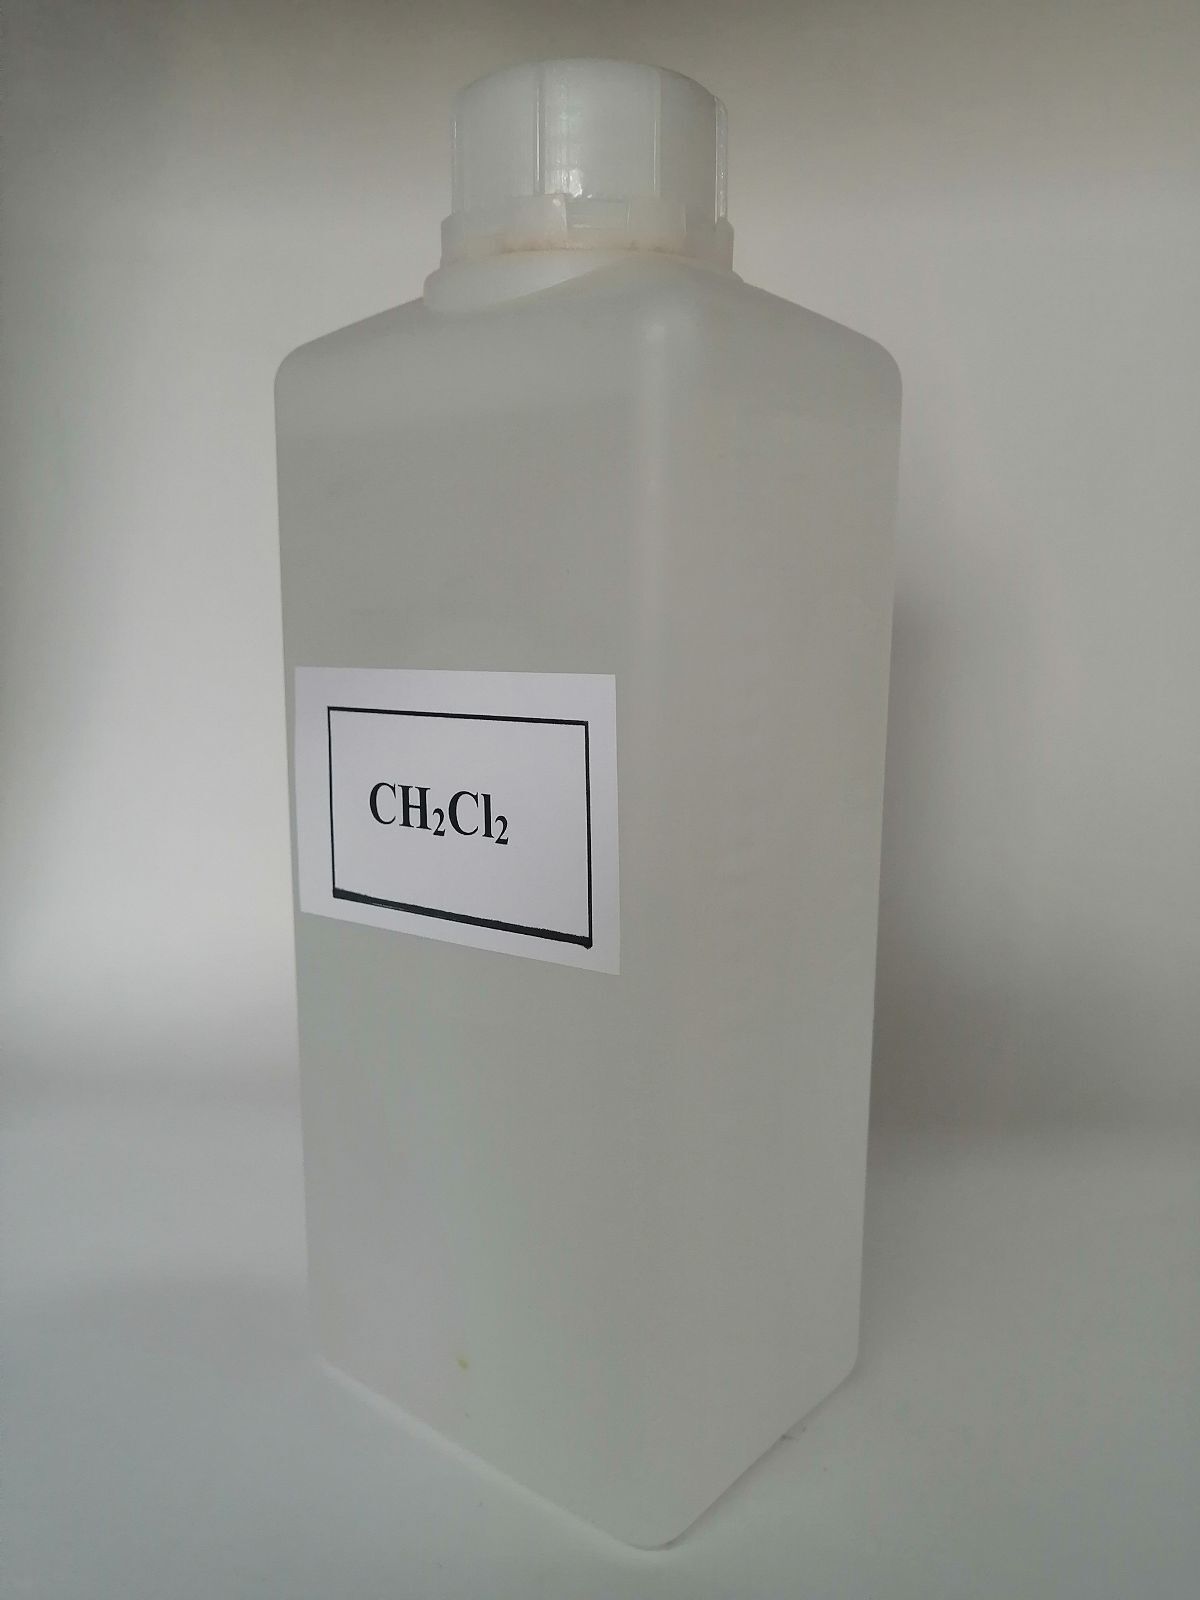 Метилен хлористый хч (дихлорметан) минимальный объем 1 л